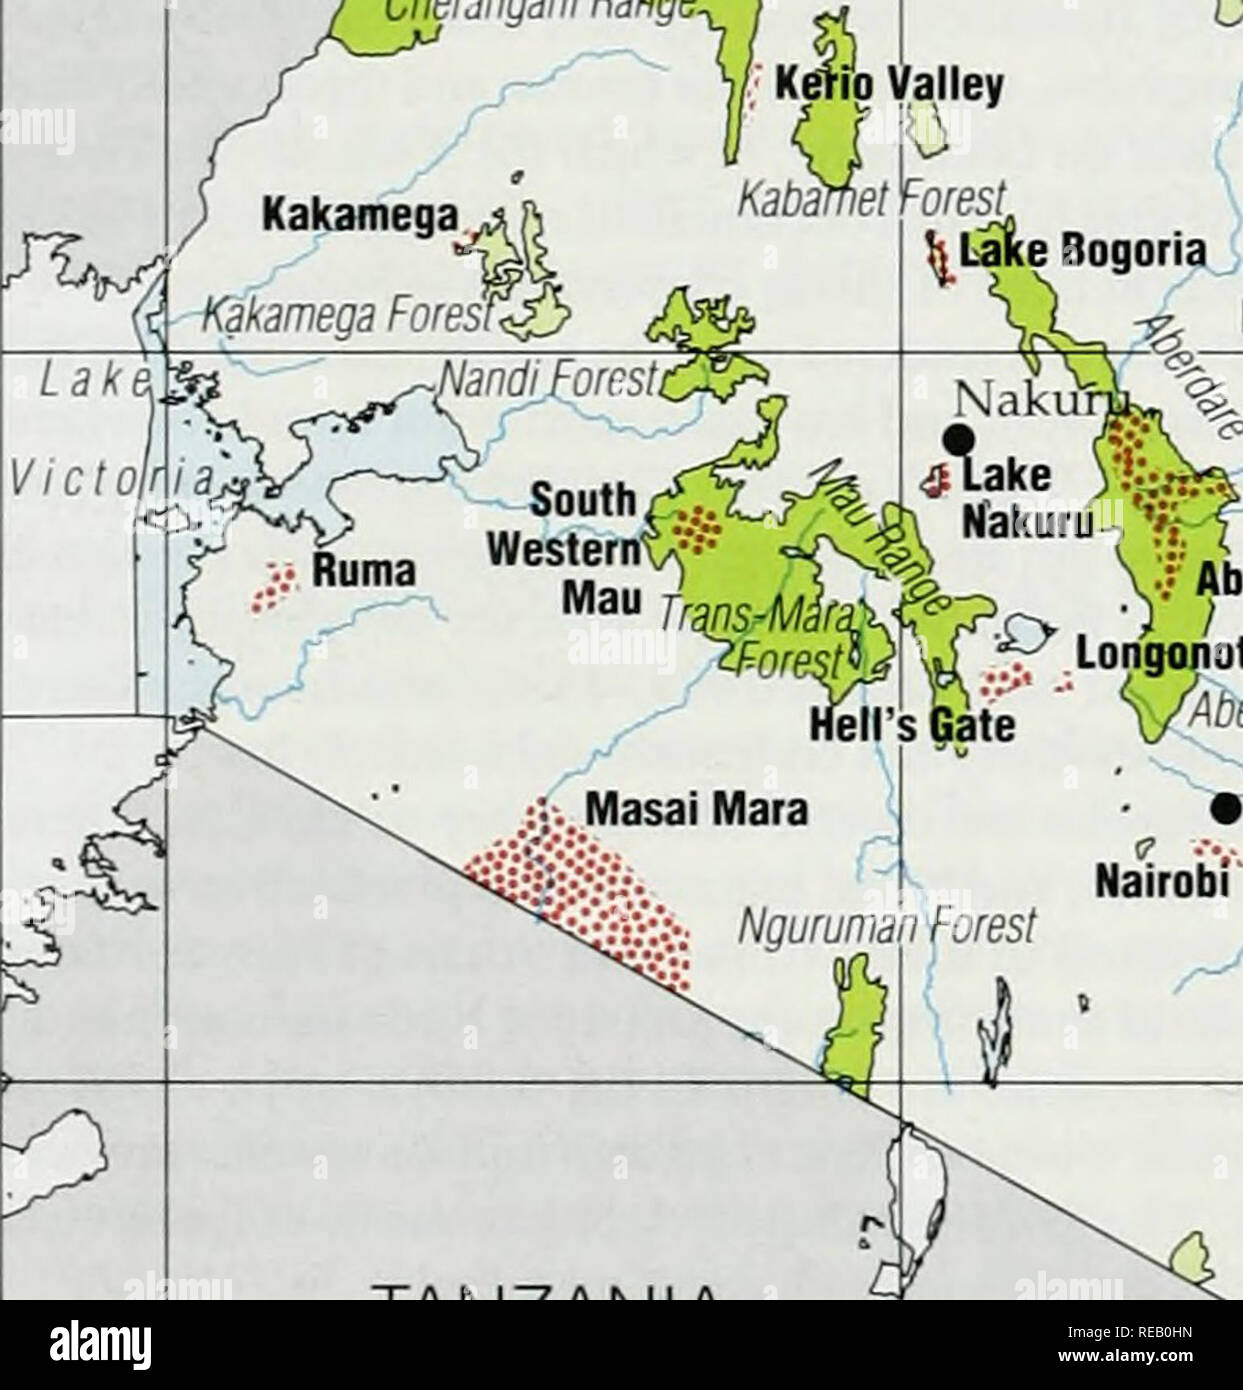 The Conservation Atlas Of Tropical Forests Africa W Uganda V Kulal Forest Marsabit 2a N A V I Vt Quot Turkana I Njsolot J A A A A A A Mount Elgon 4321m A A A A Saiwa